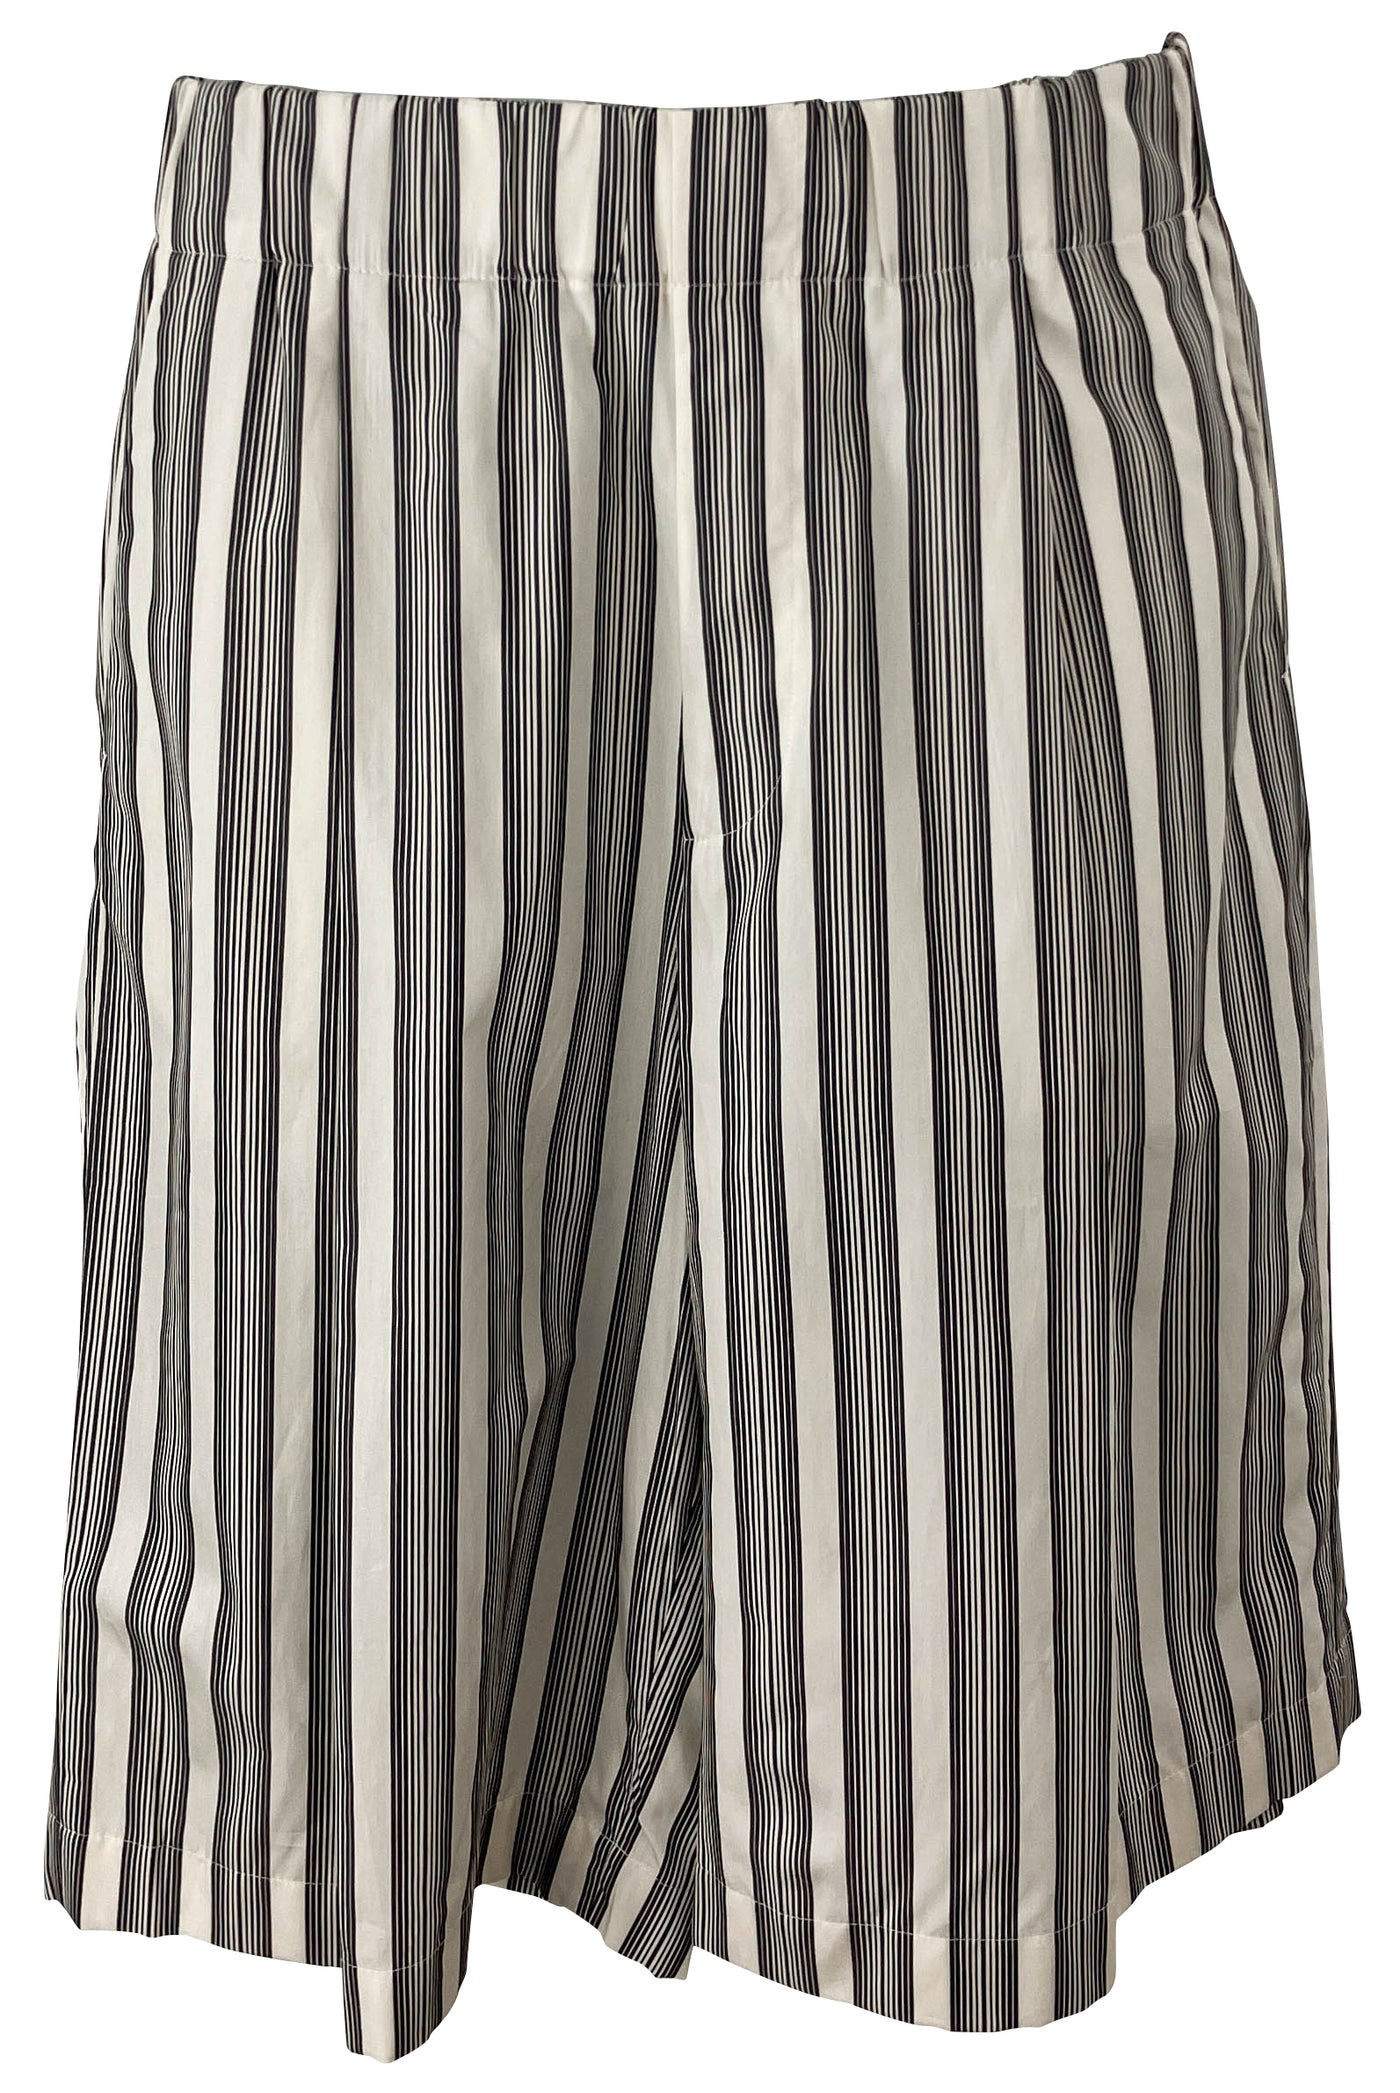 Dries Van Noten Pilburn Striped Shorts in Black/White - Discounts on Dries Van Noten at UAL